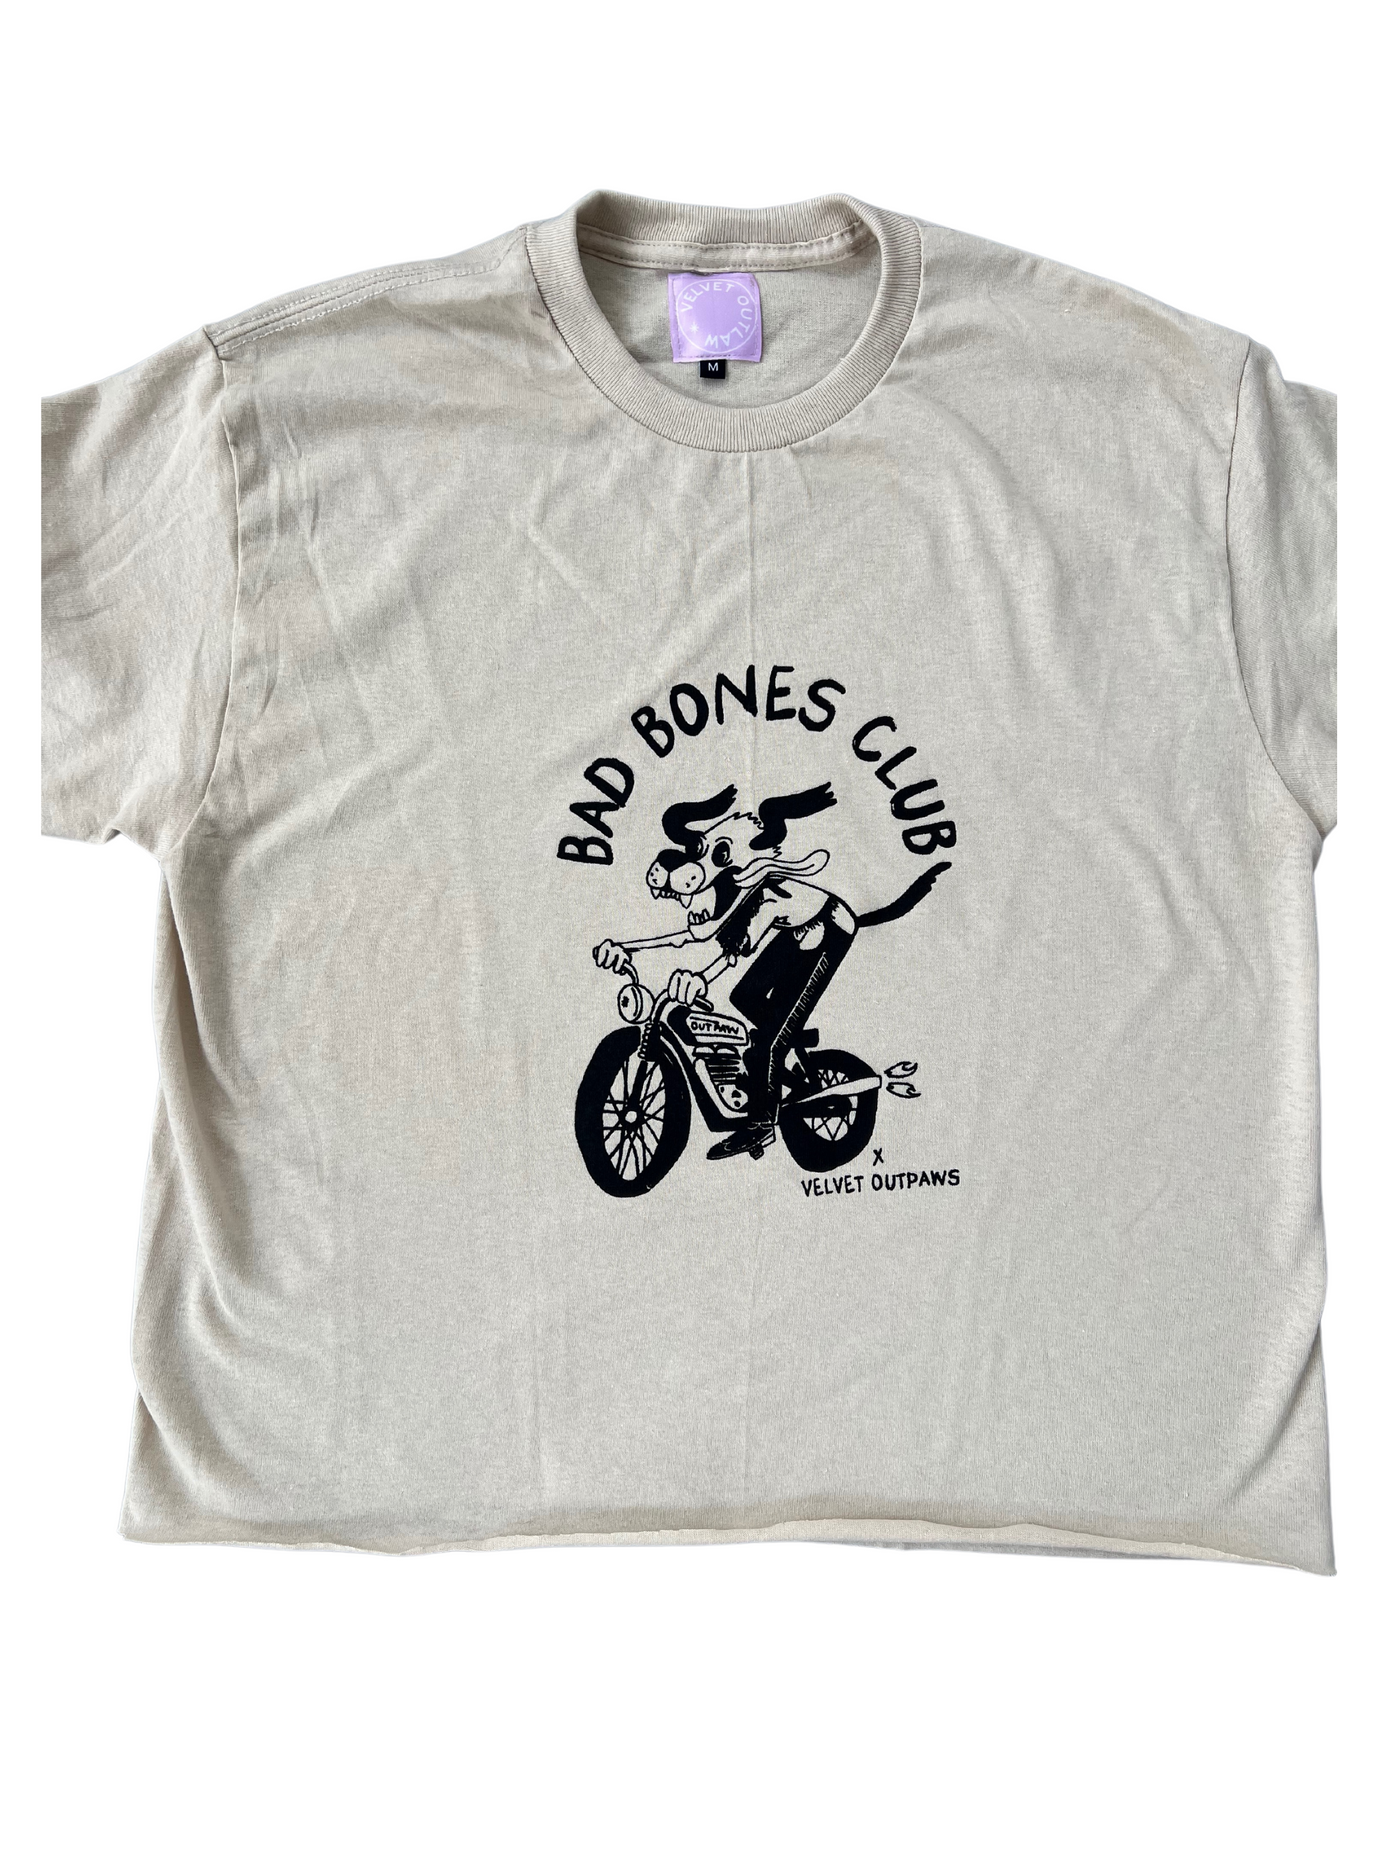 Misprints “Bad Bones Club” shirt